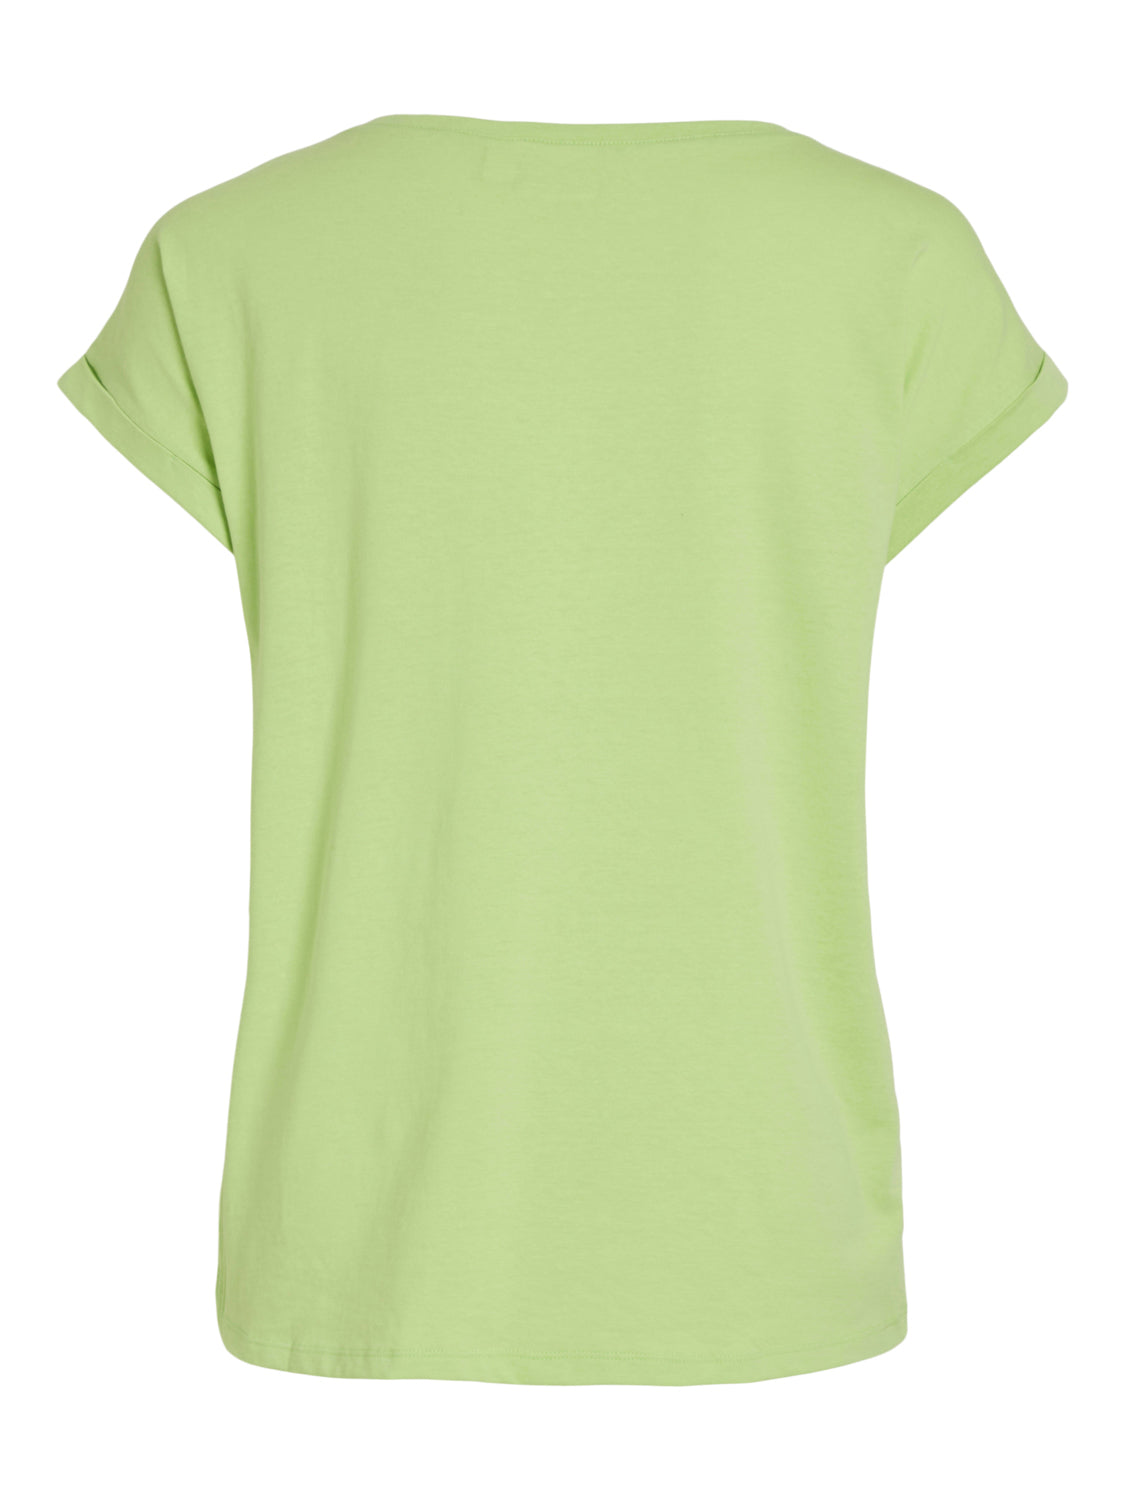 VIDREAMERS T-Shirts & Tops - Lettuce Green